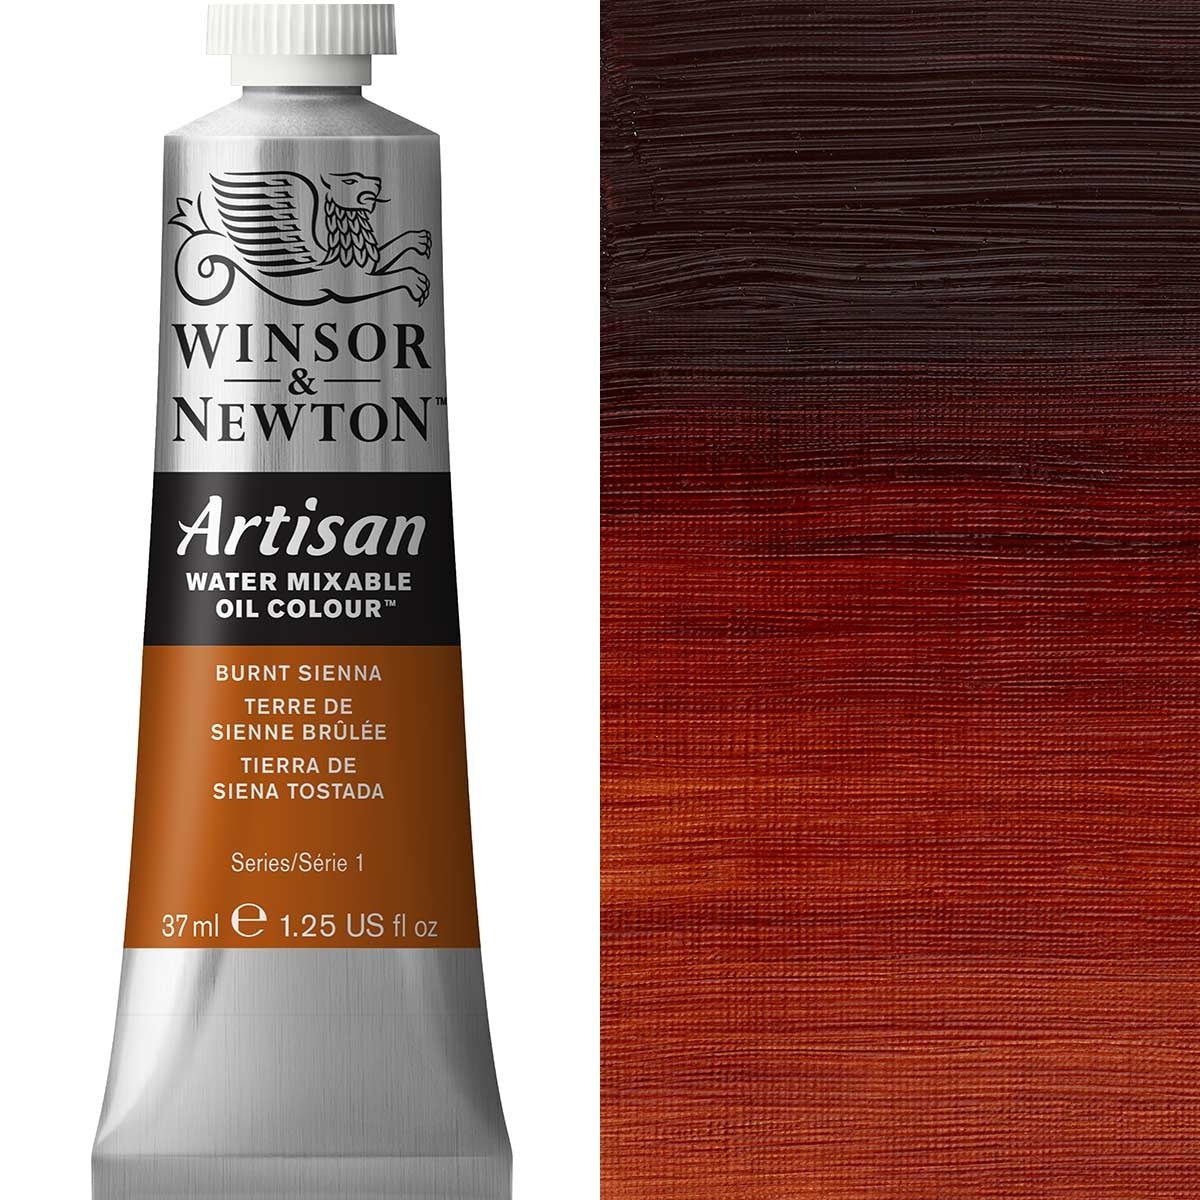 Winsor and Newton - Artisan Oil Colour Watermixable - 37ml - - Burnt Sienna